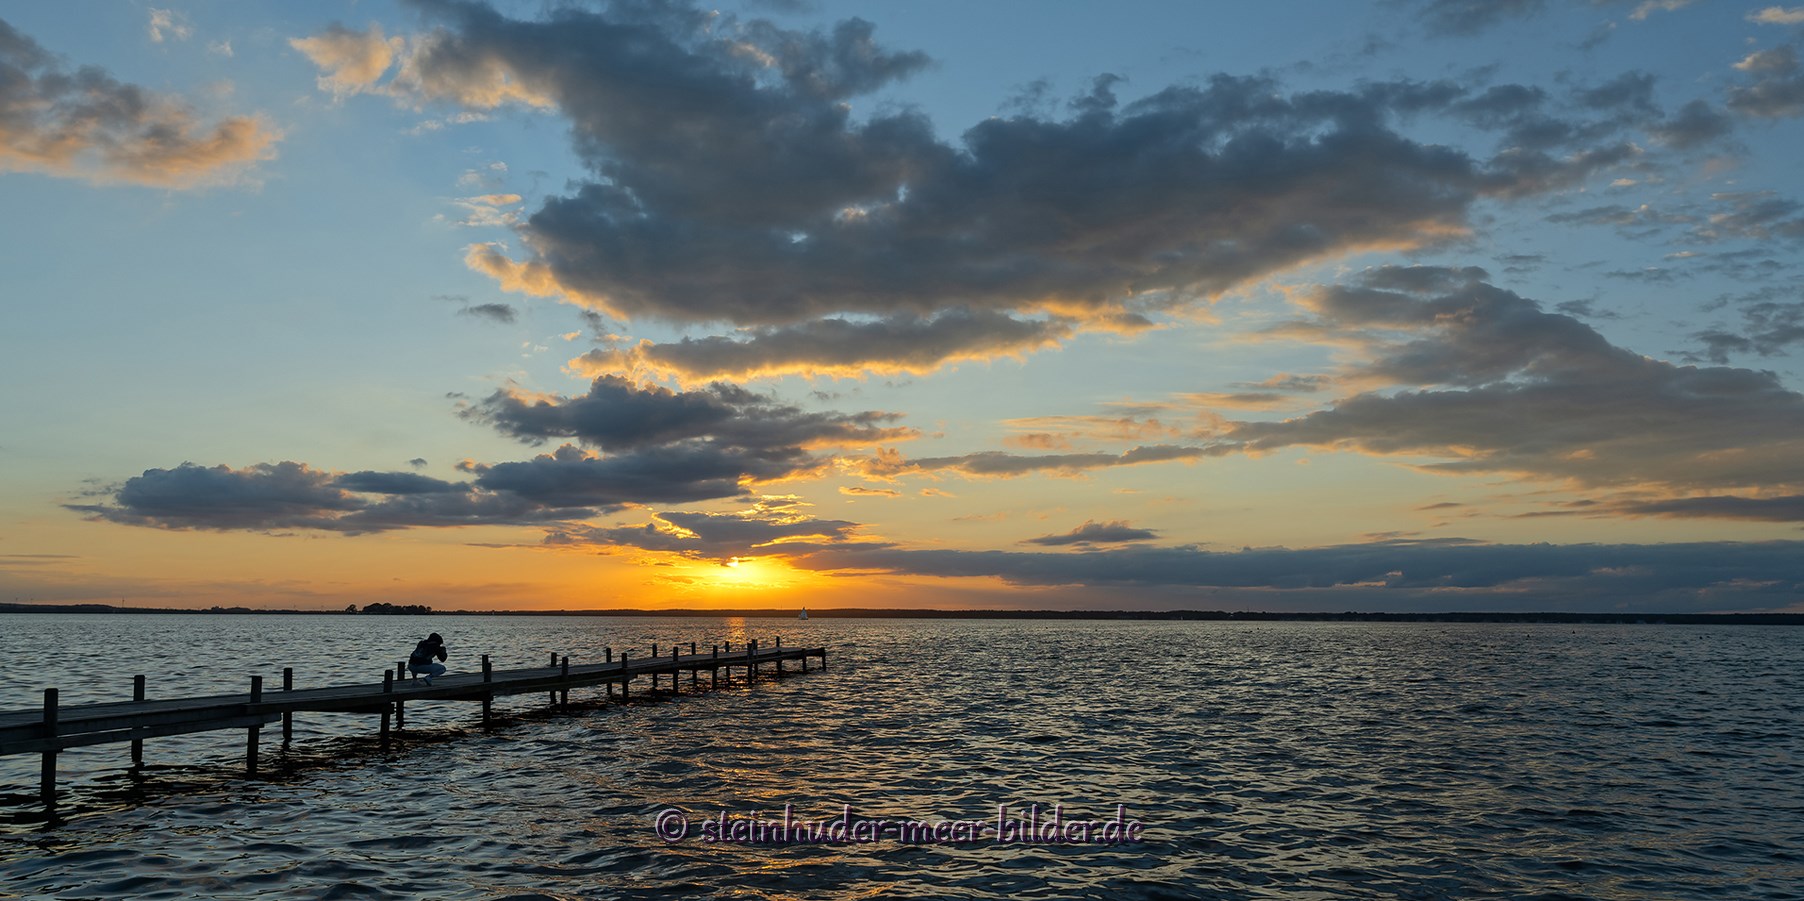 Sonnenuntergang-Steinhuder-Meer-Abend-Stimmungen-Landschafts-Bilder-Fotos-A_Z7A_3143a-Kopie